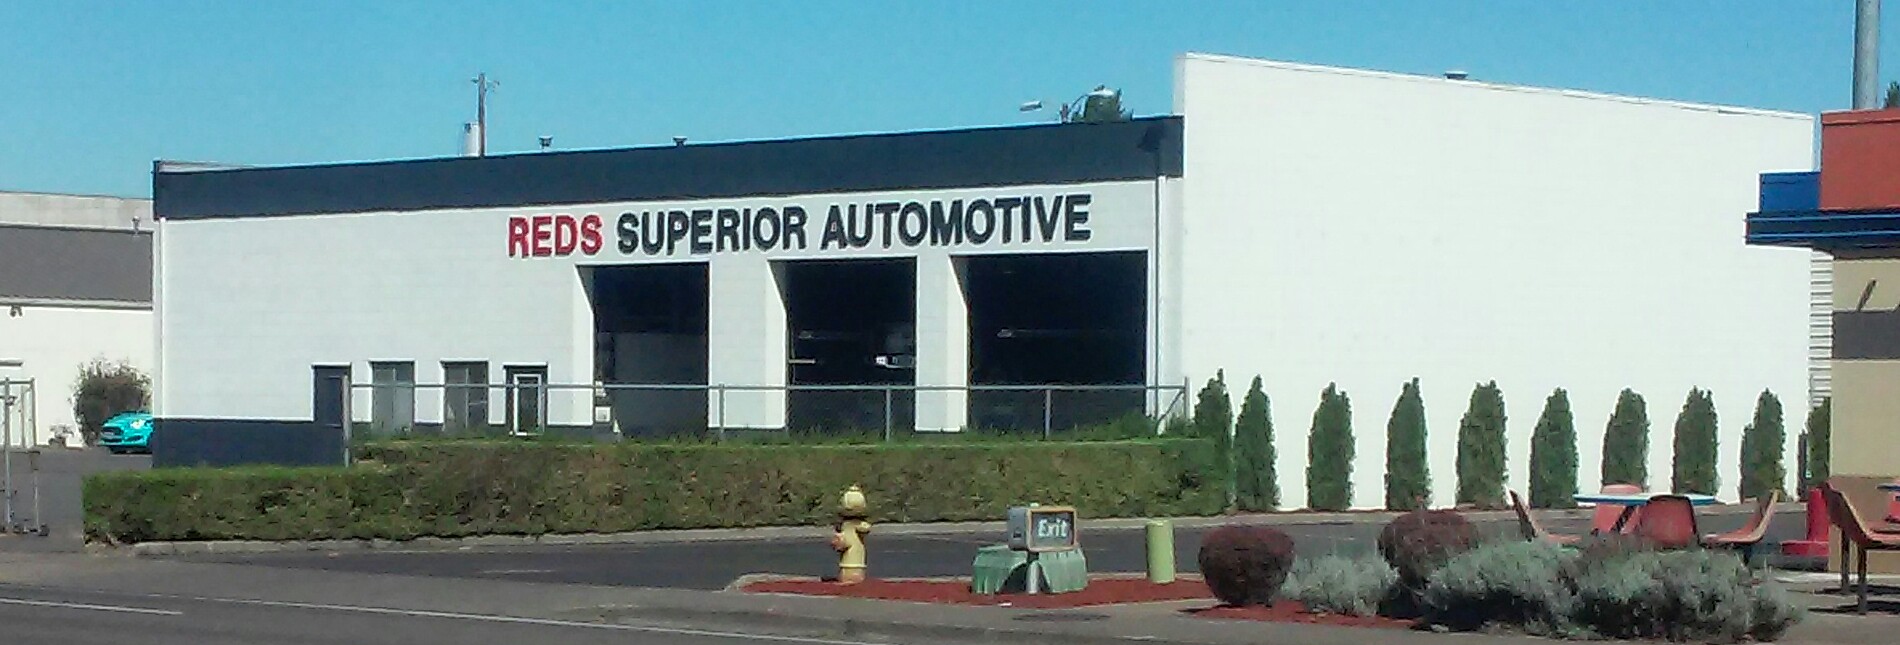 Reds Superior Automotive Services